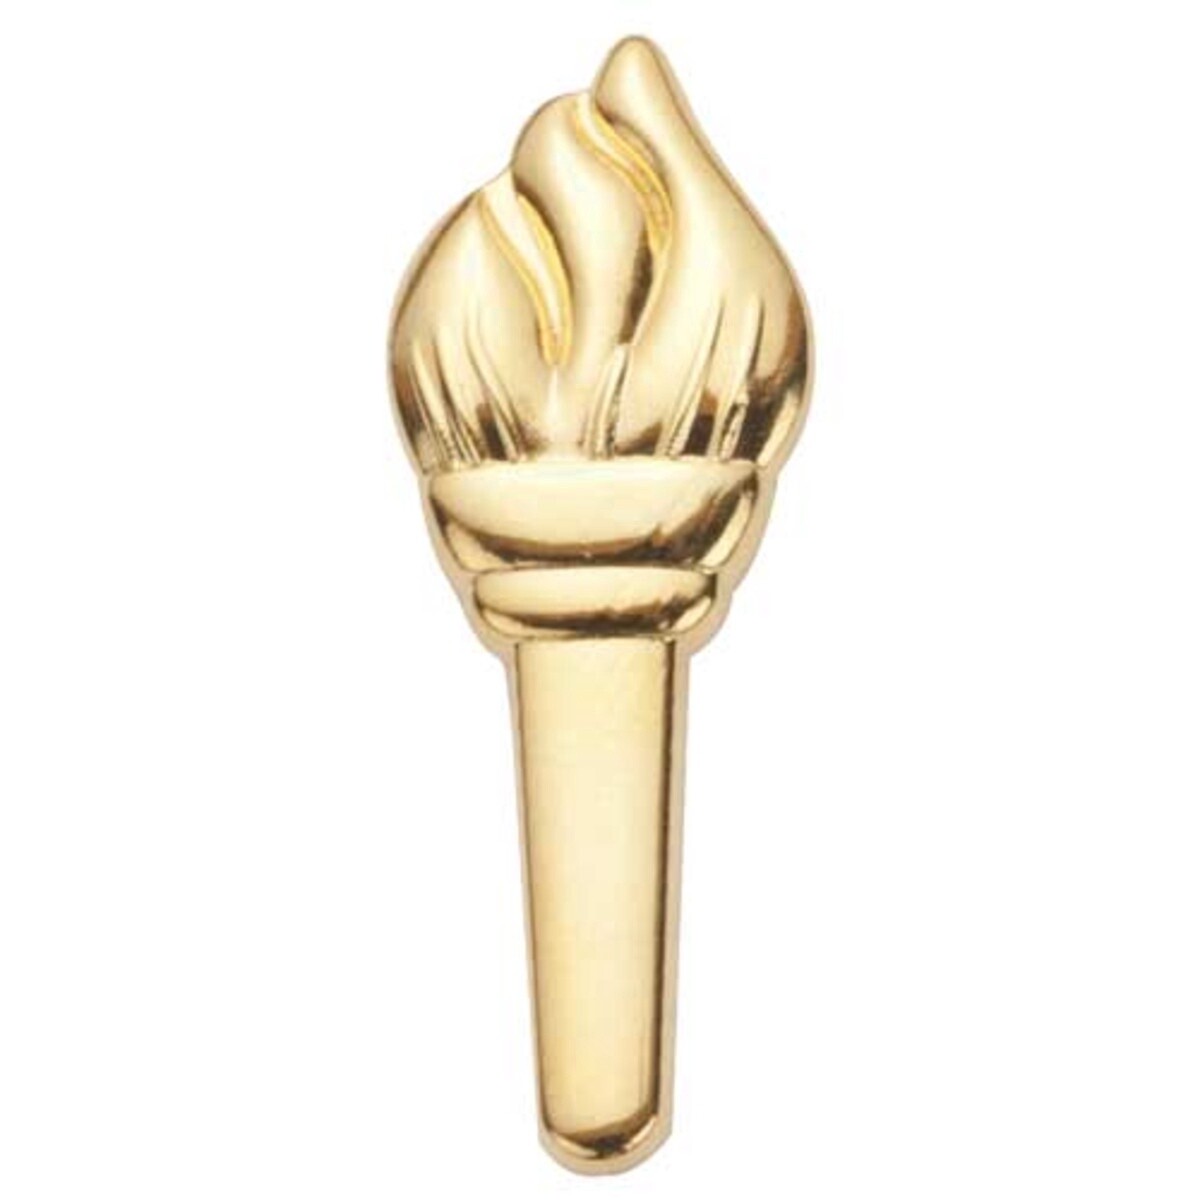 Ambassador Torch Award Pin (Gold)